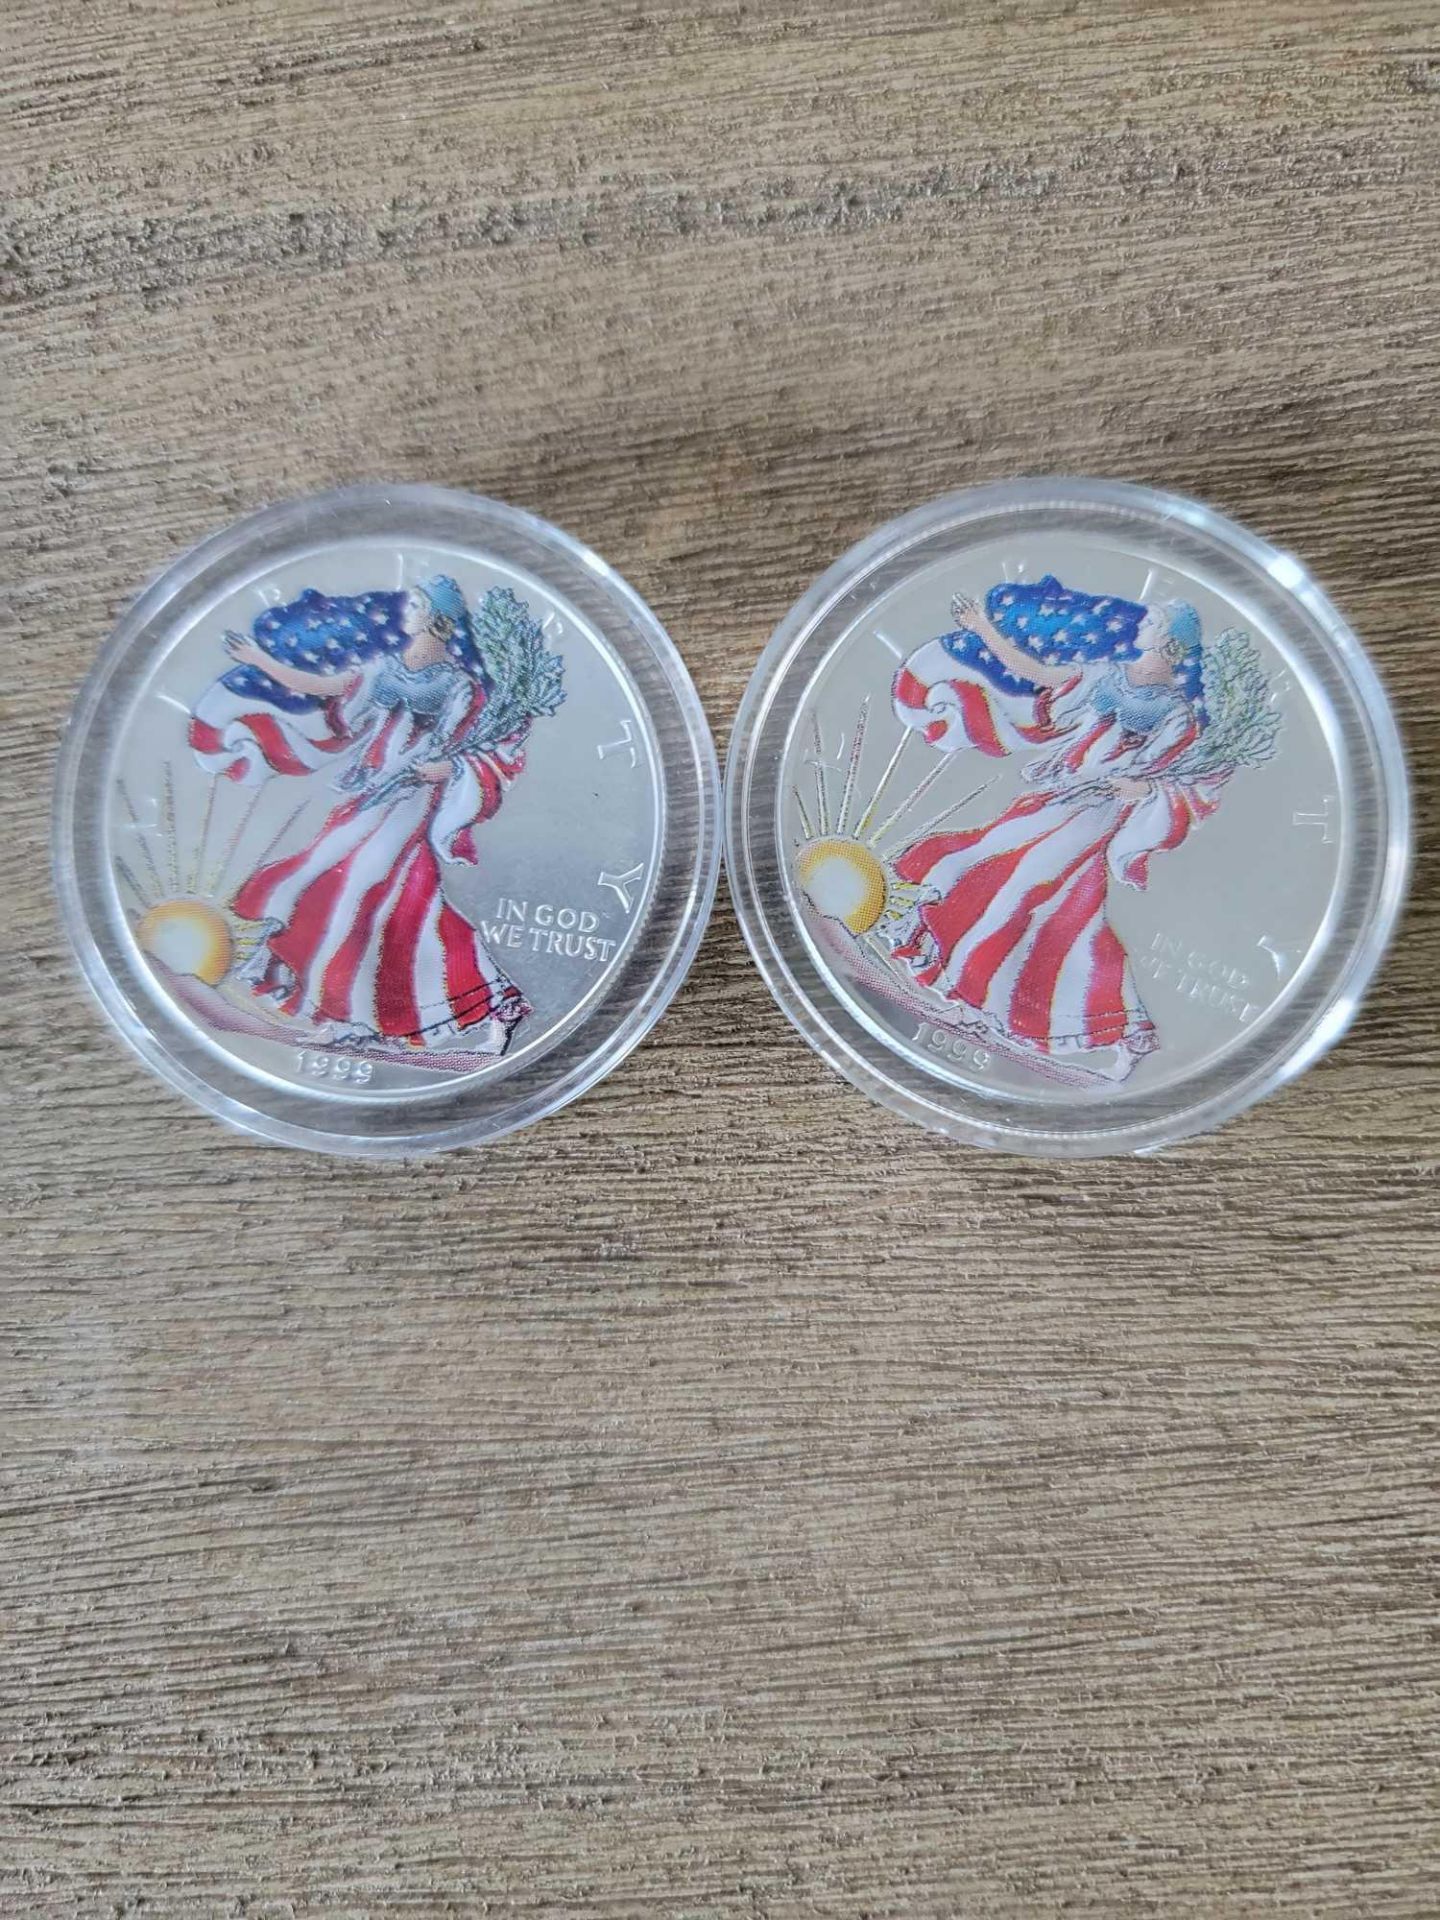 2 1999 Silver Eagle Colored Coins